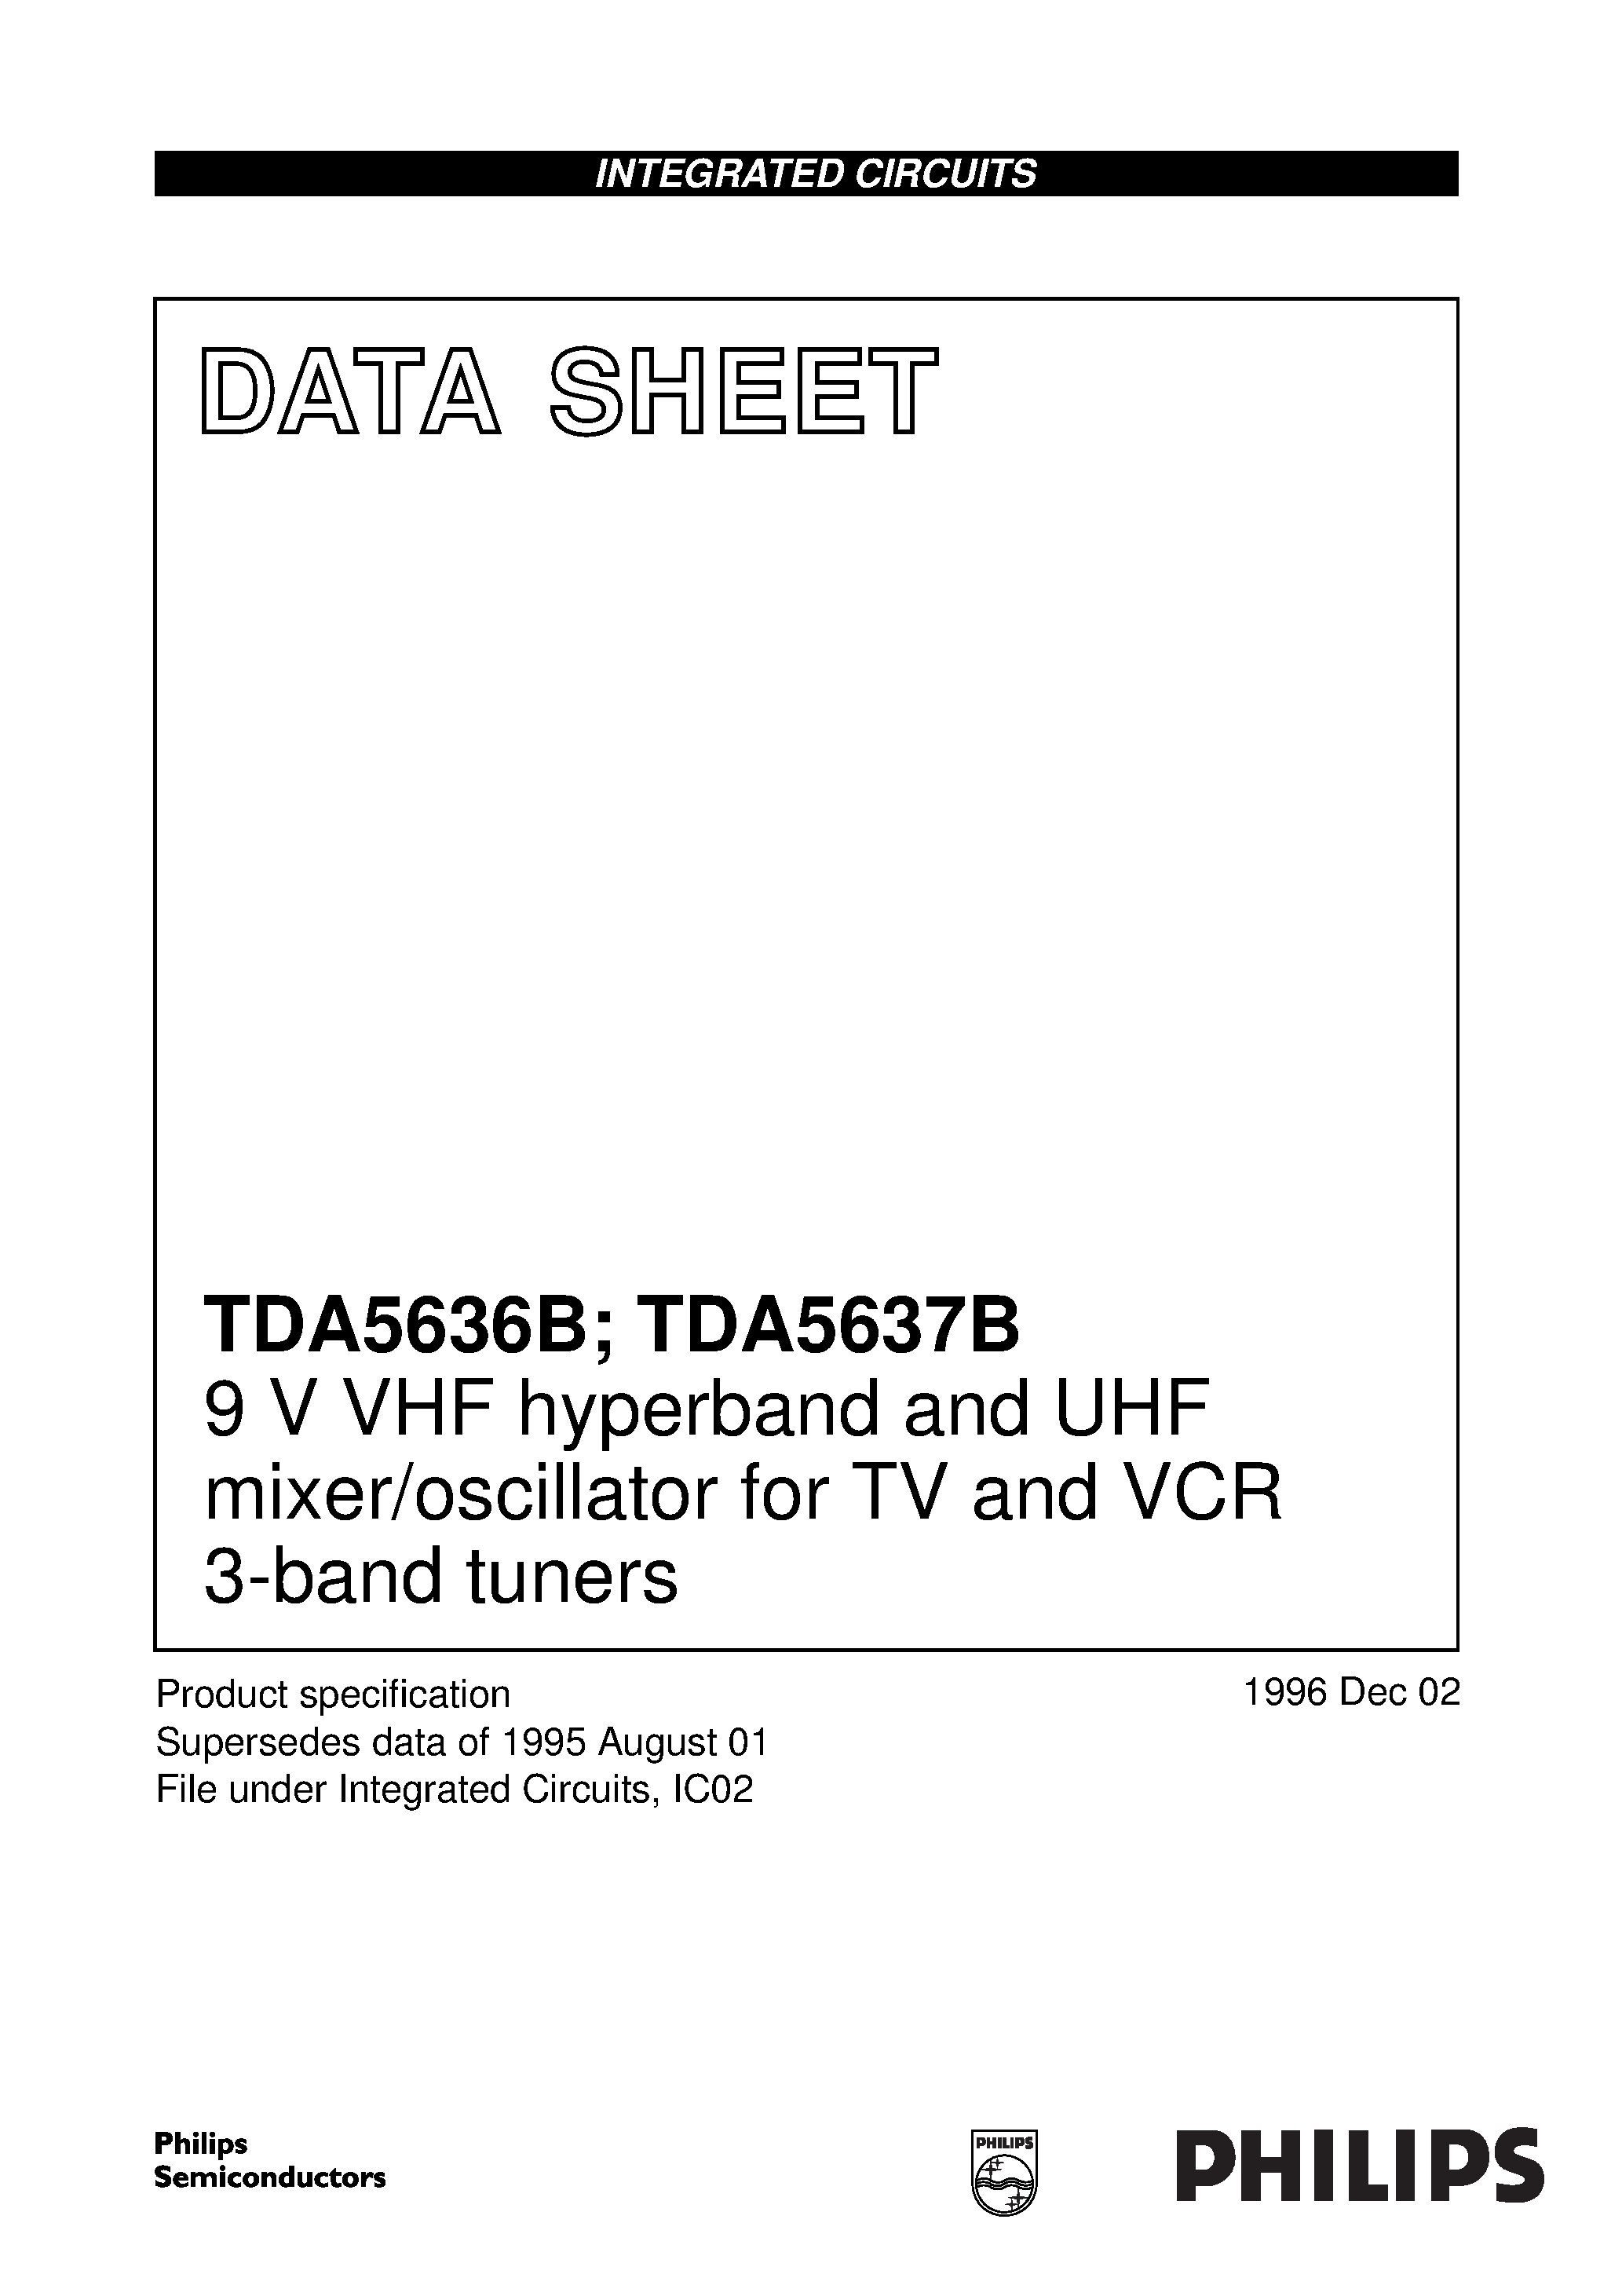 Datasheet TDA5637B - 9 V VHF hyperband and UHF mixer/oscillator for TV and VCR 3-band tuners page 1